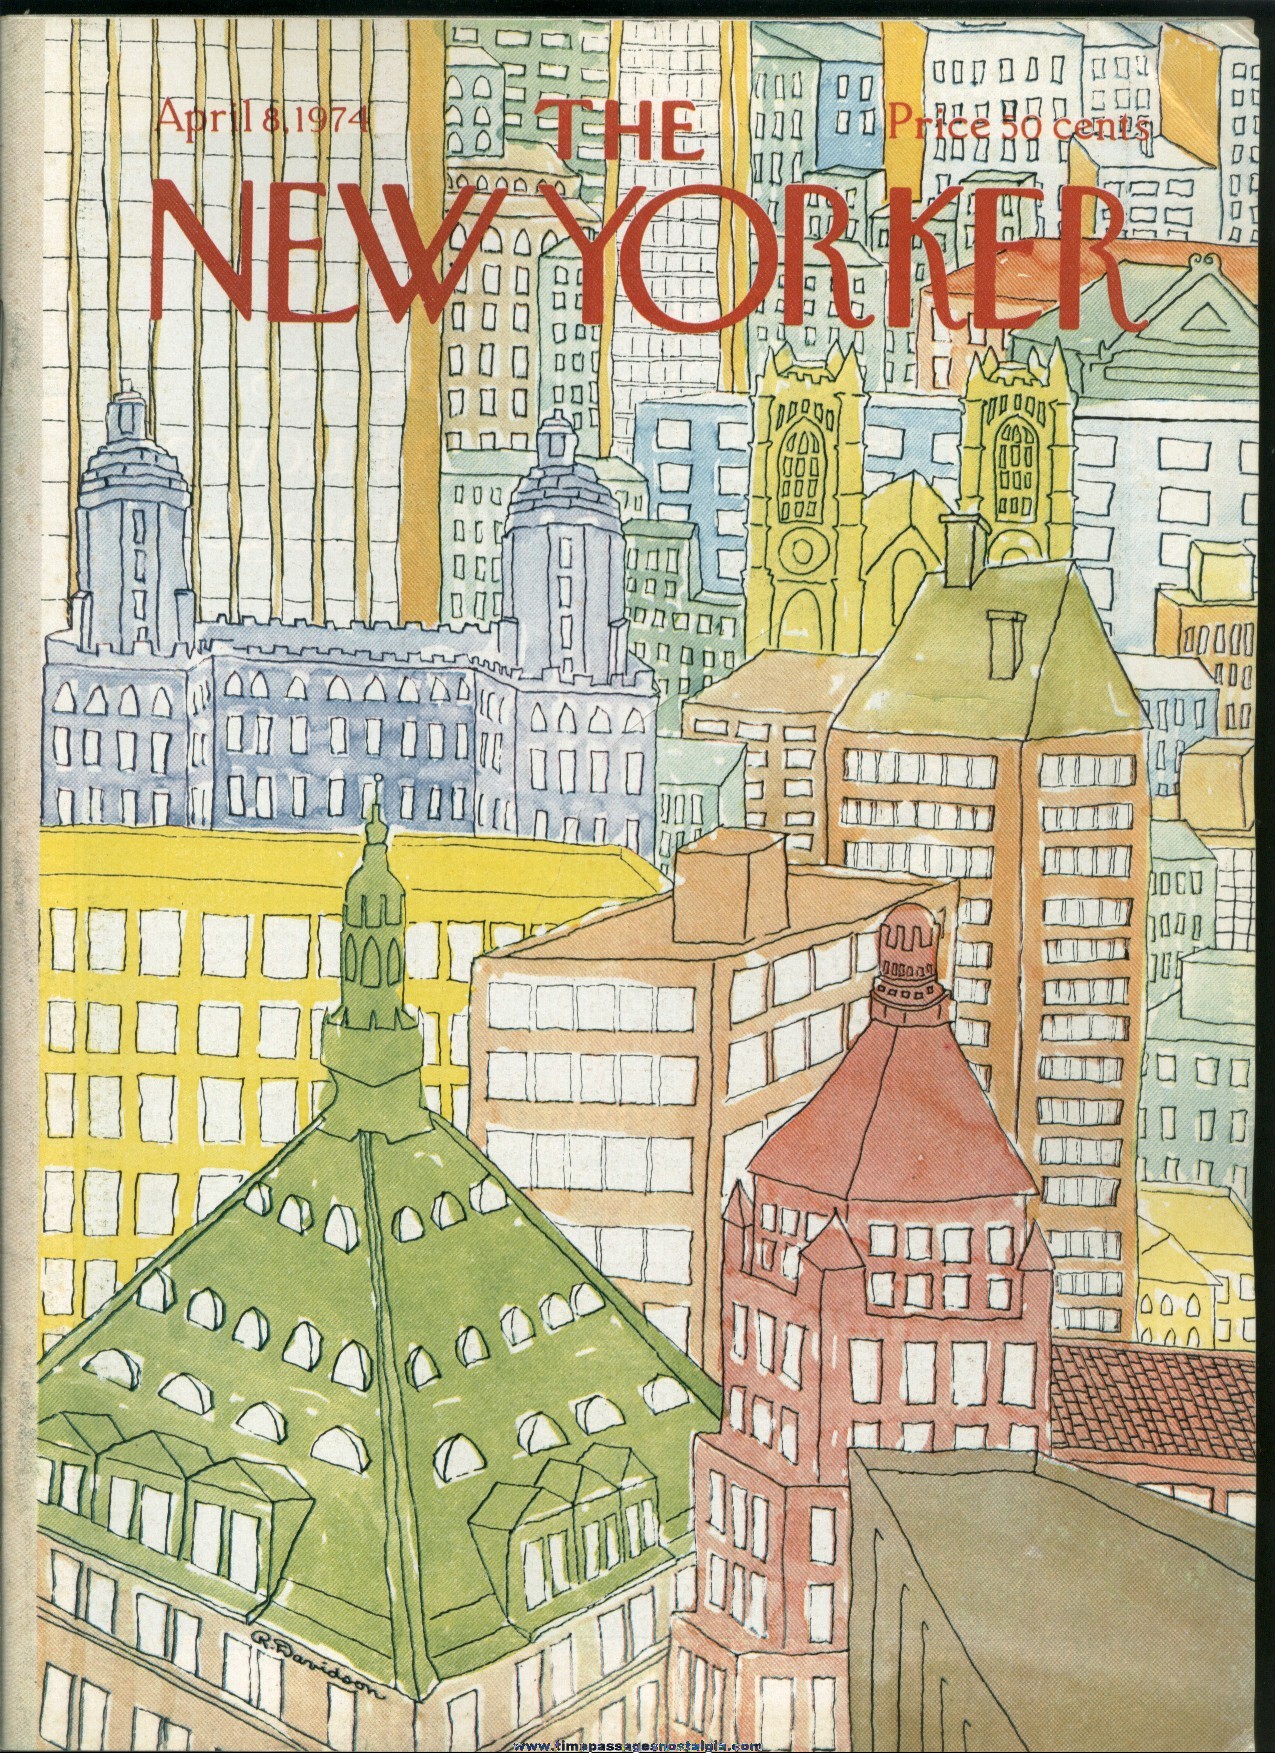 New Yorker Magazine - April 8, 1974 - Cover by Raymond Davidson - TPNC